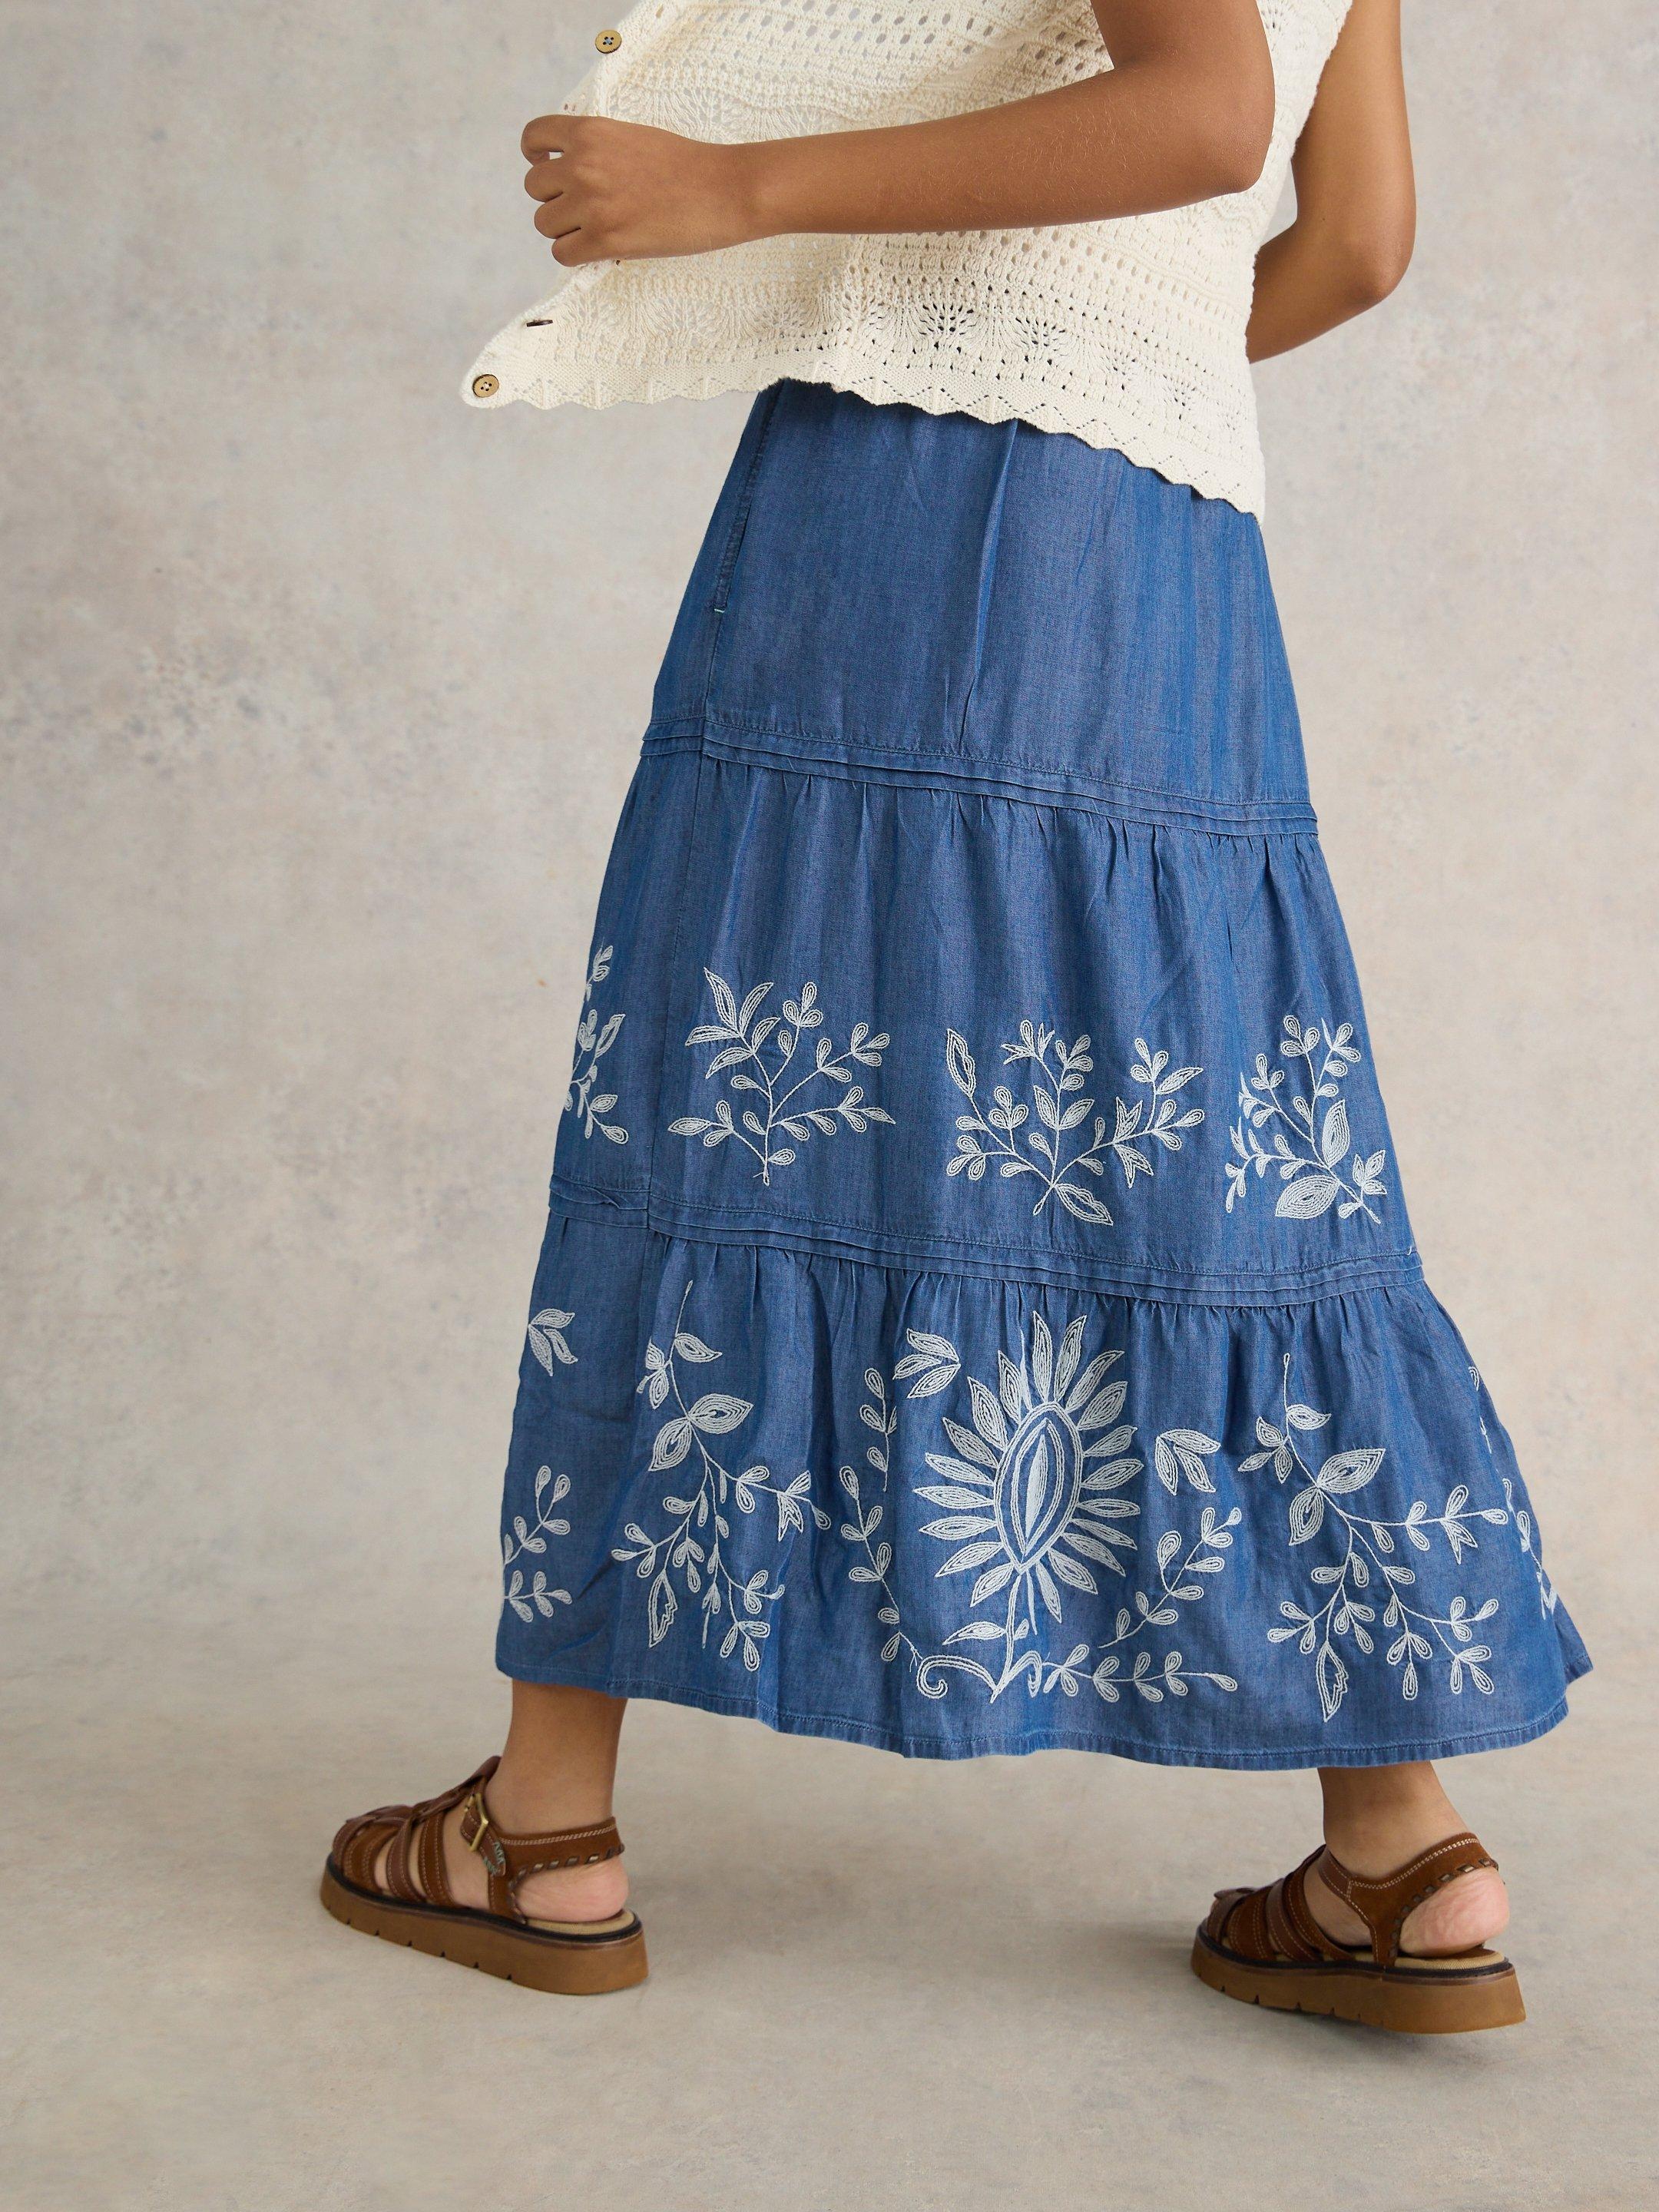 Isla Embroidered Denim Skirt in LGT DENIM - MODEL BACK